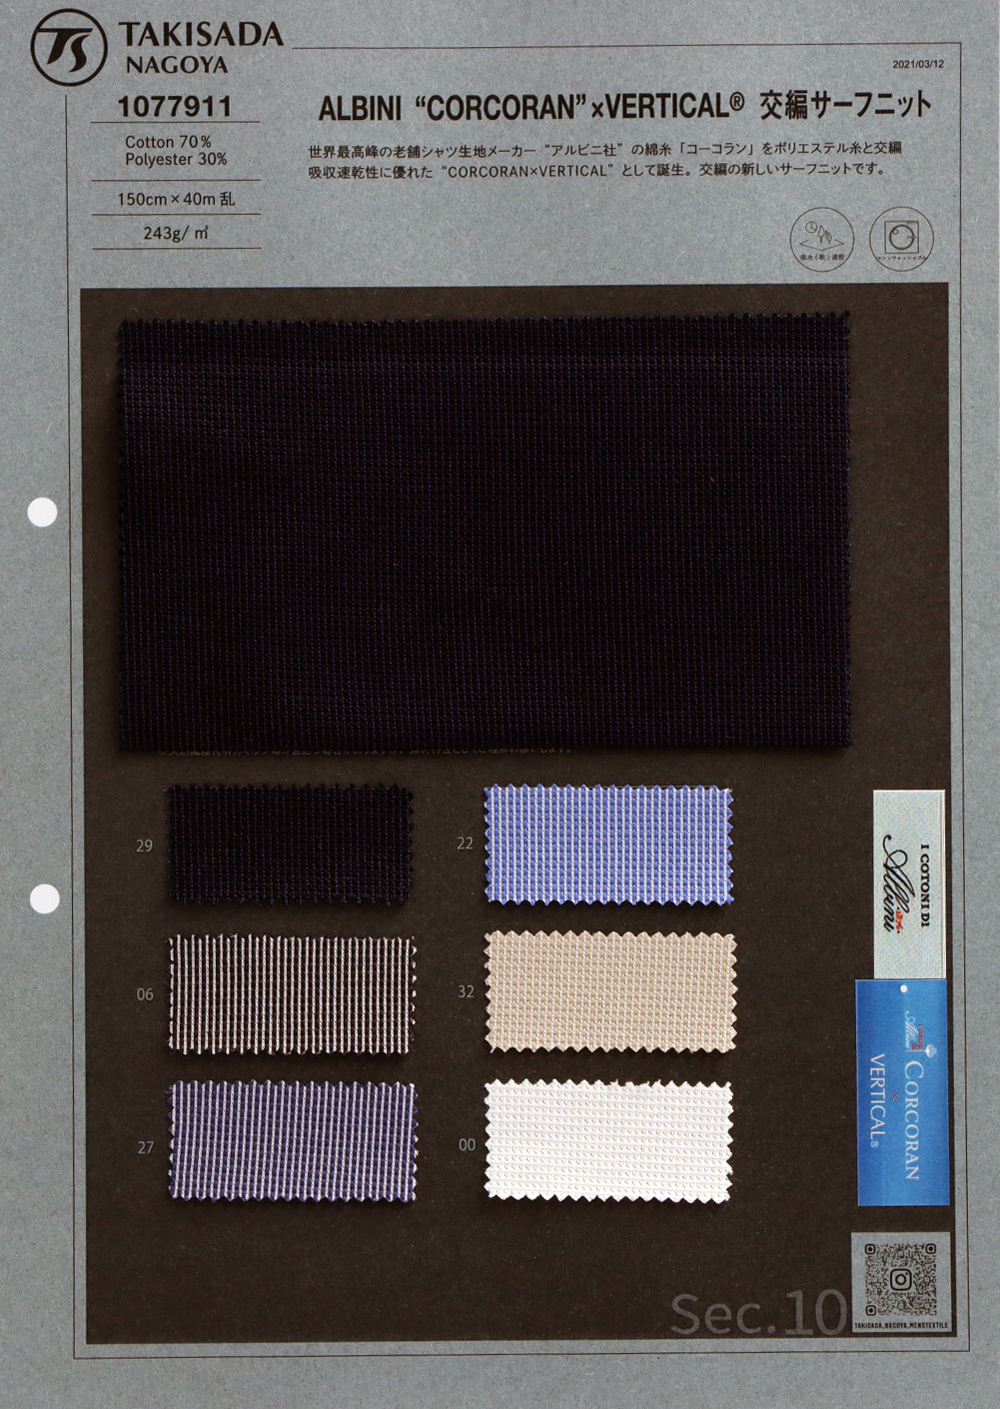 1077911 ALBINI CORCORAN X VERTICAL Surf Knit[Fabrica Textil] Takisada Nagoya